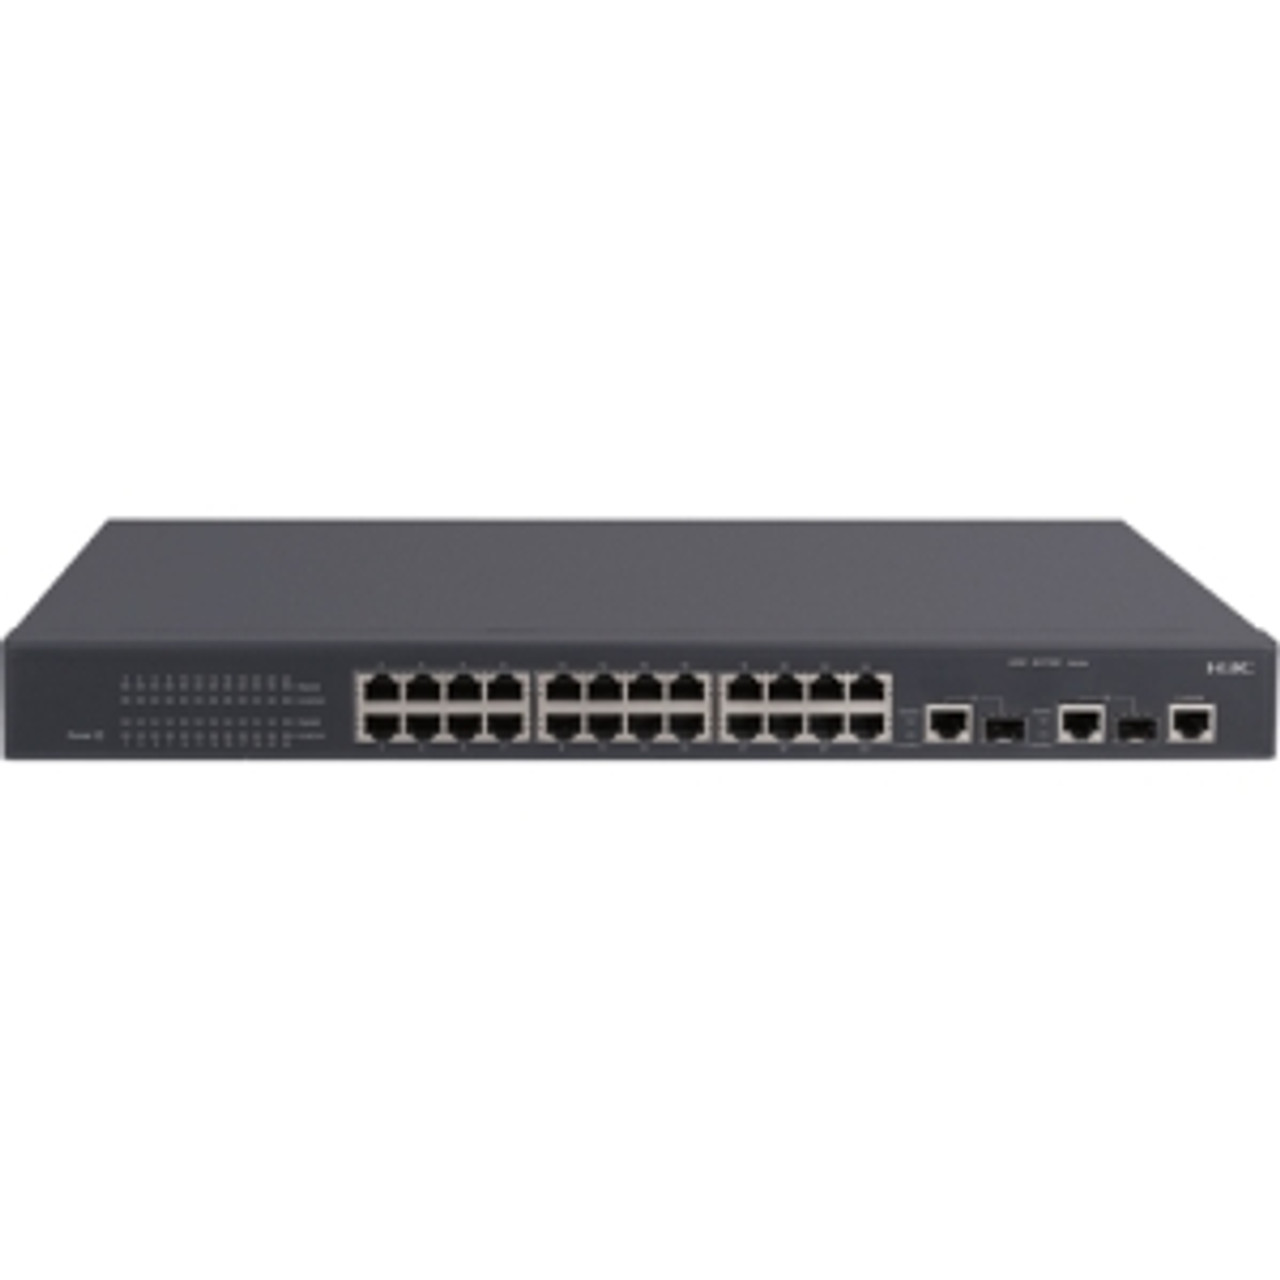 0235A301 3Com S3100-26TP-EI Ethernet Switch 2 x SFP (mini-GBIC) Shared 24 x 10/100Base-TX LAN, 2 x 1000Base-T Uplink (Refurbished)